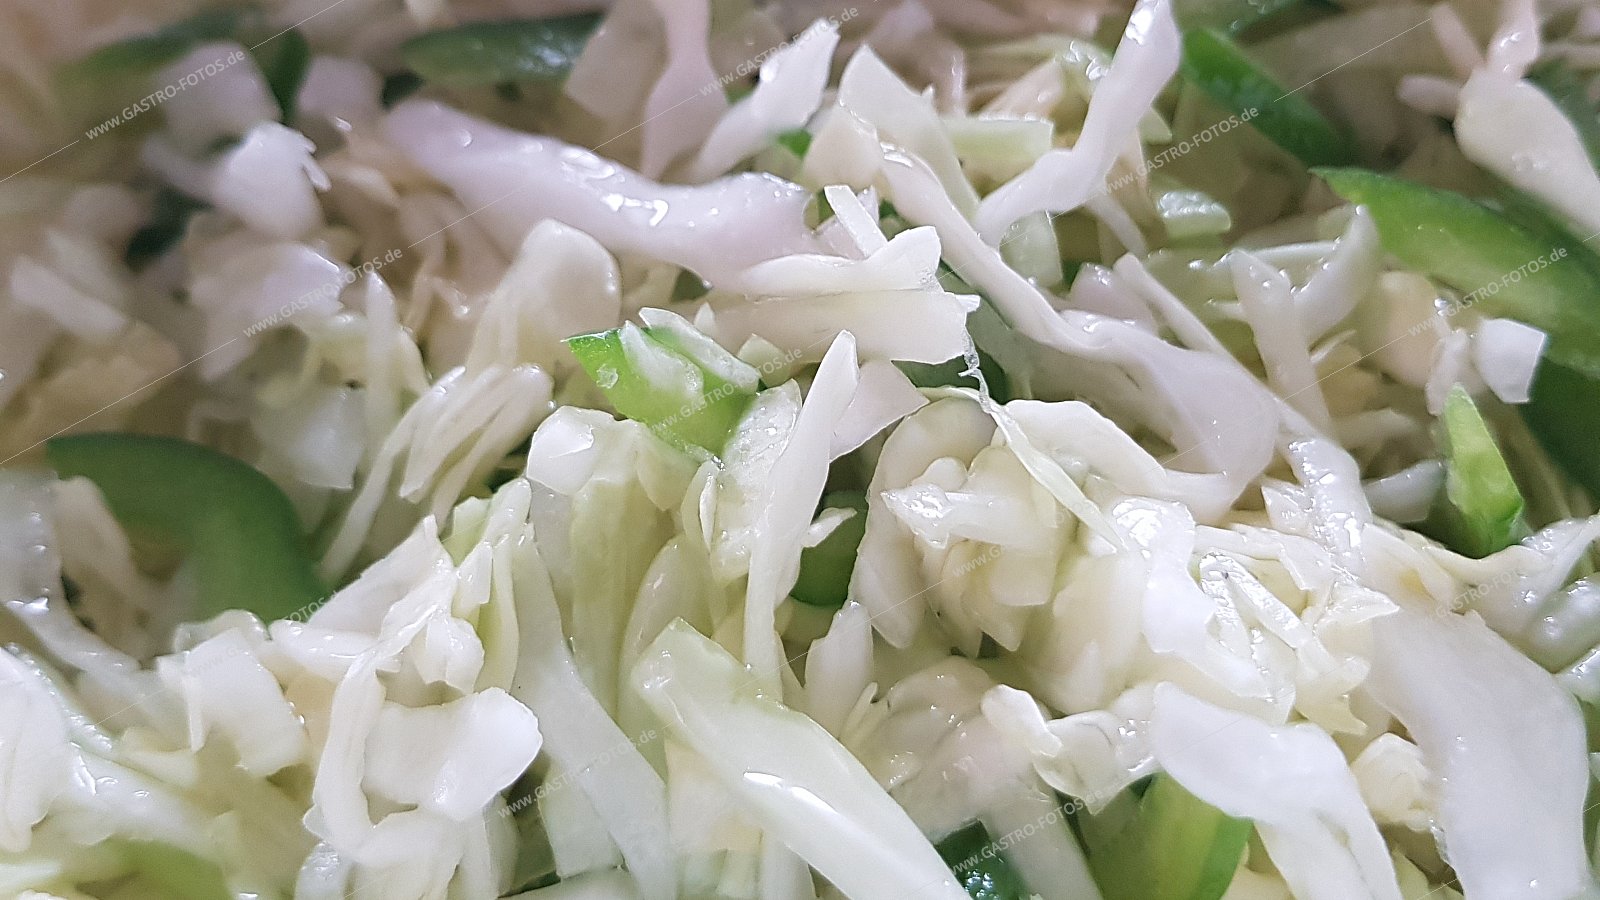 Krautsalat - Salate mit Weißkraut